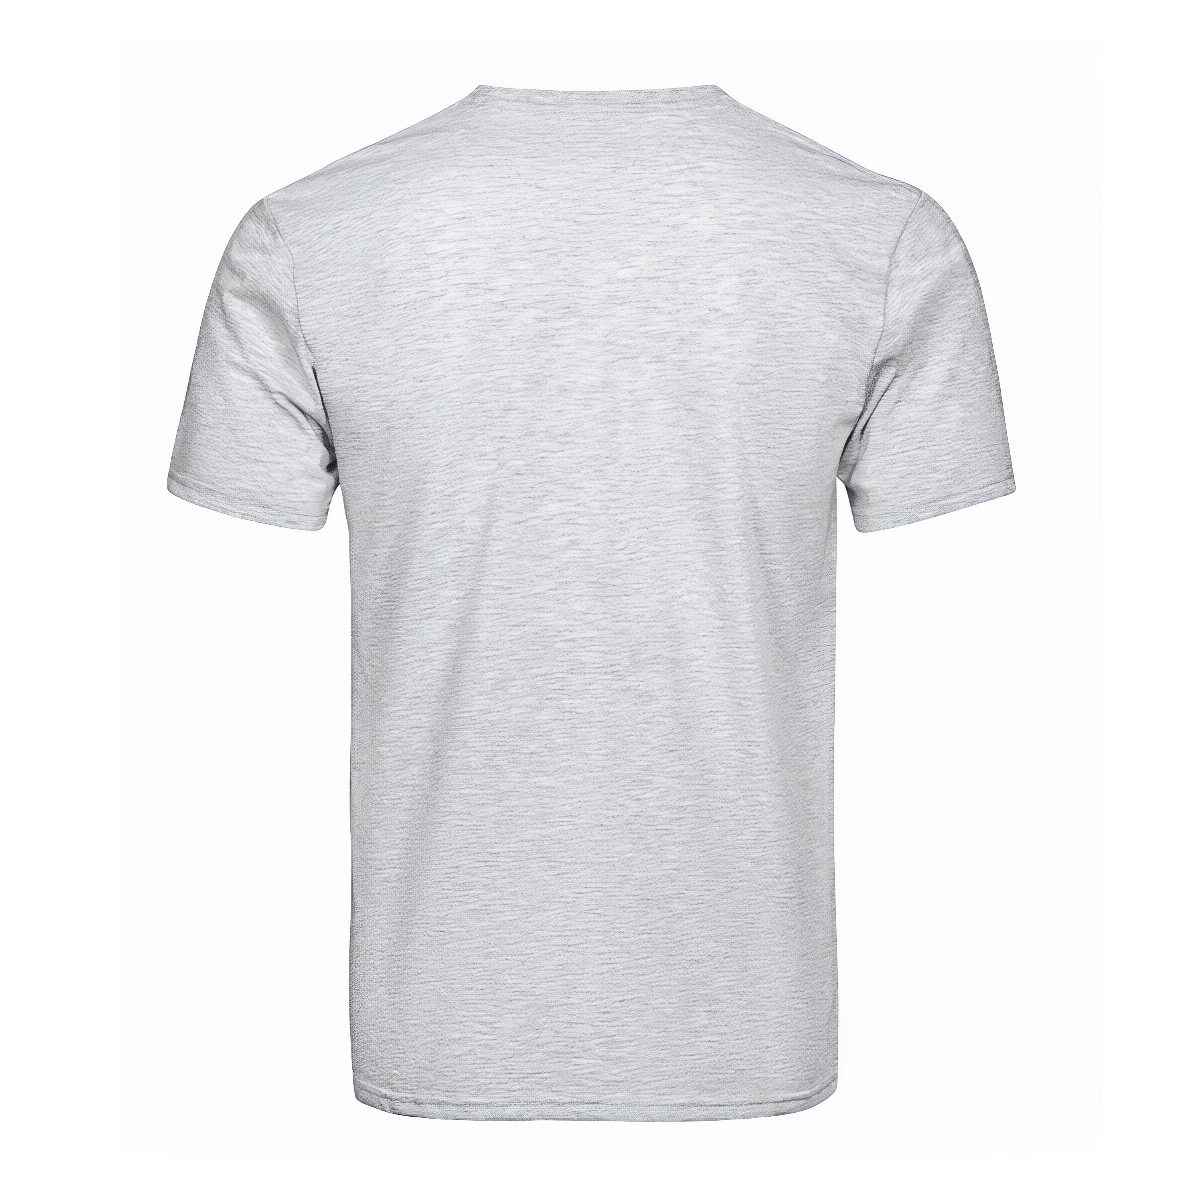 Tennant Tartan Crest T-shirt - I'm not yelling style